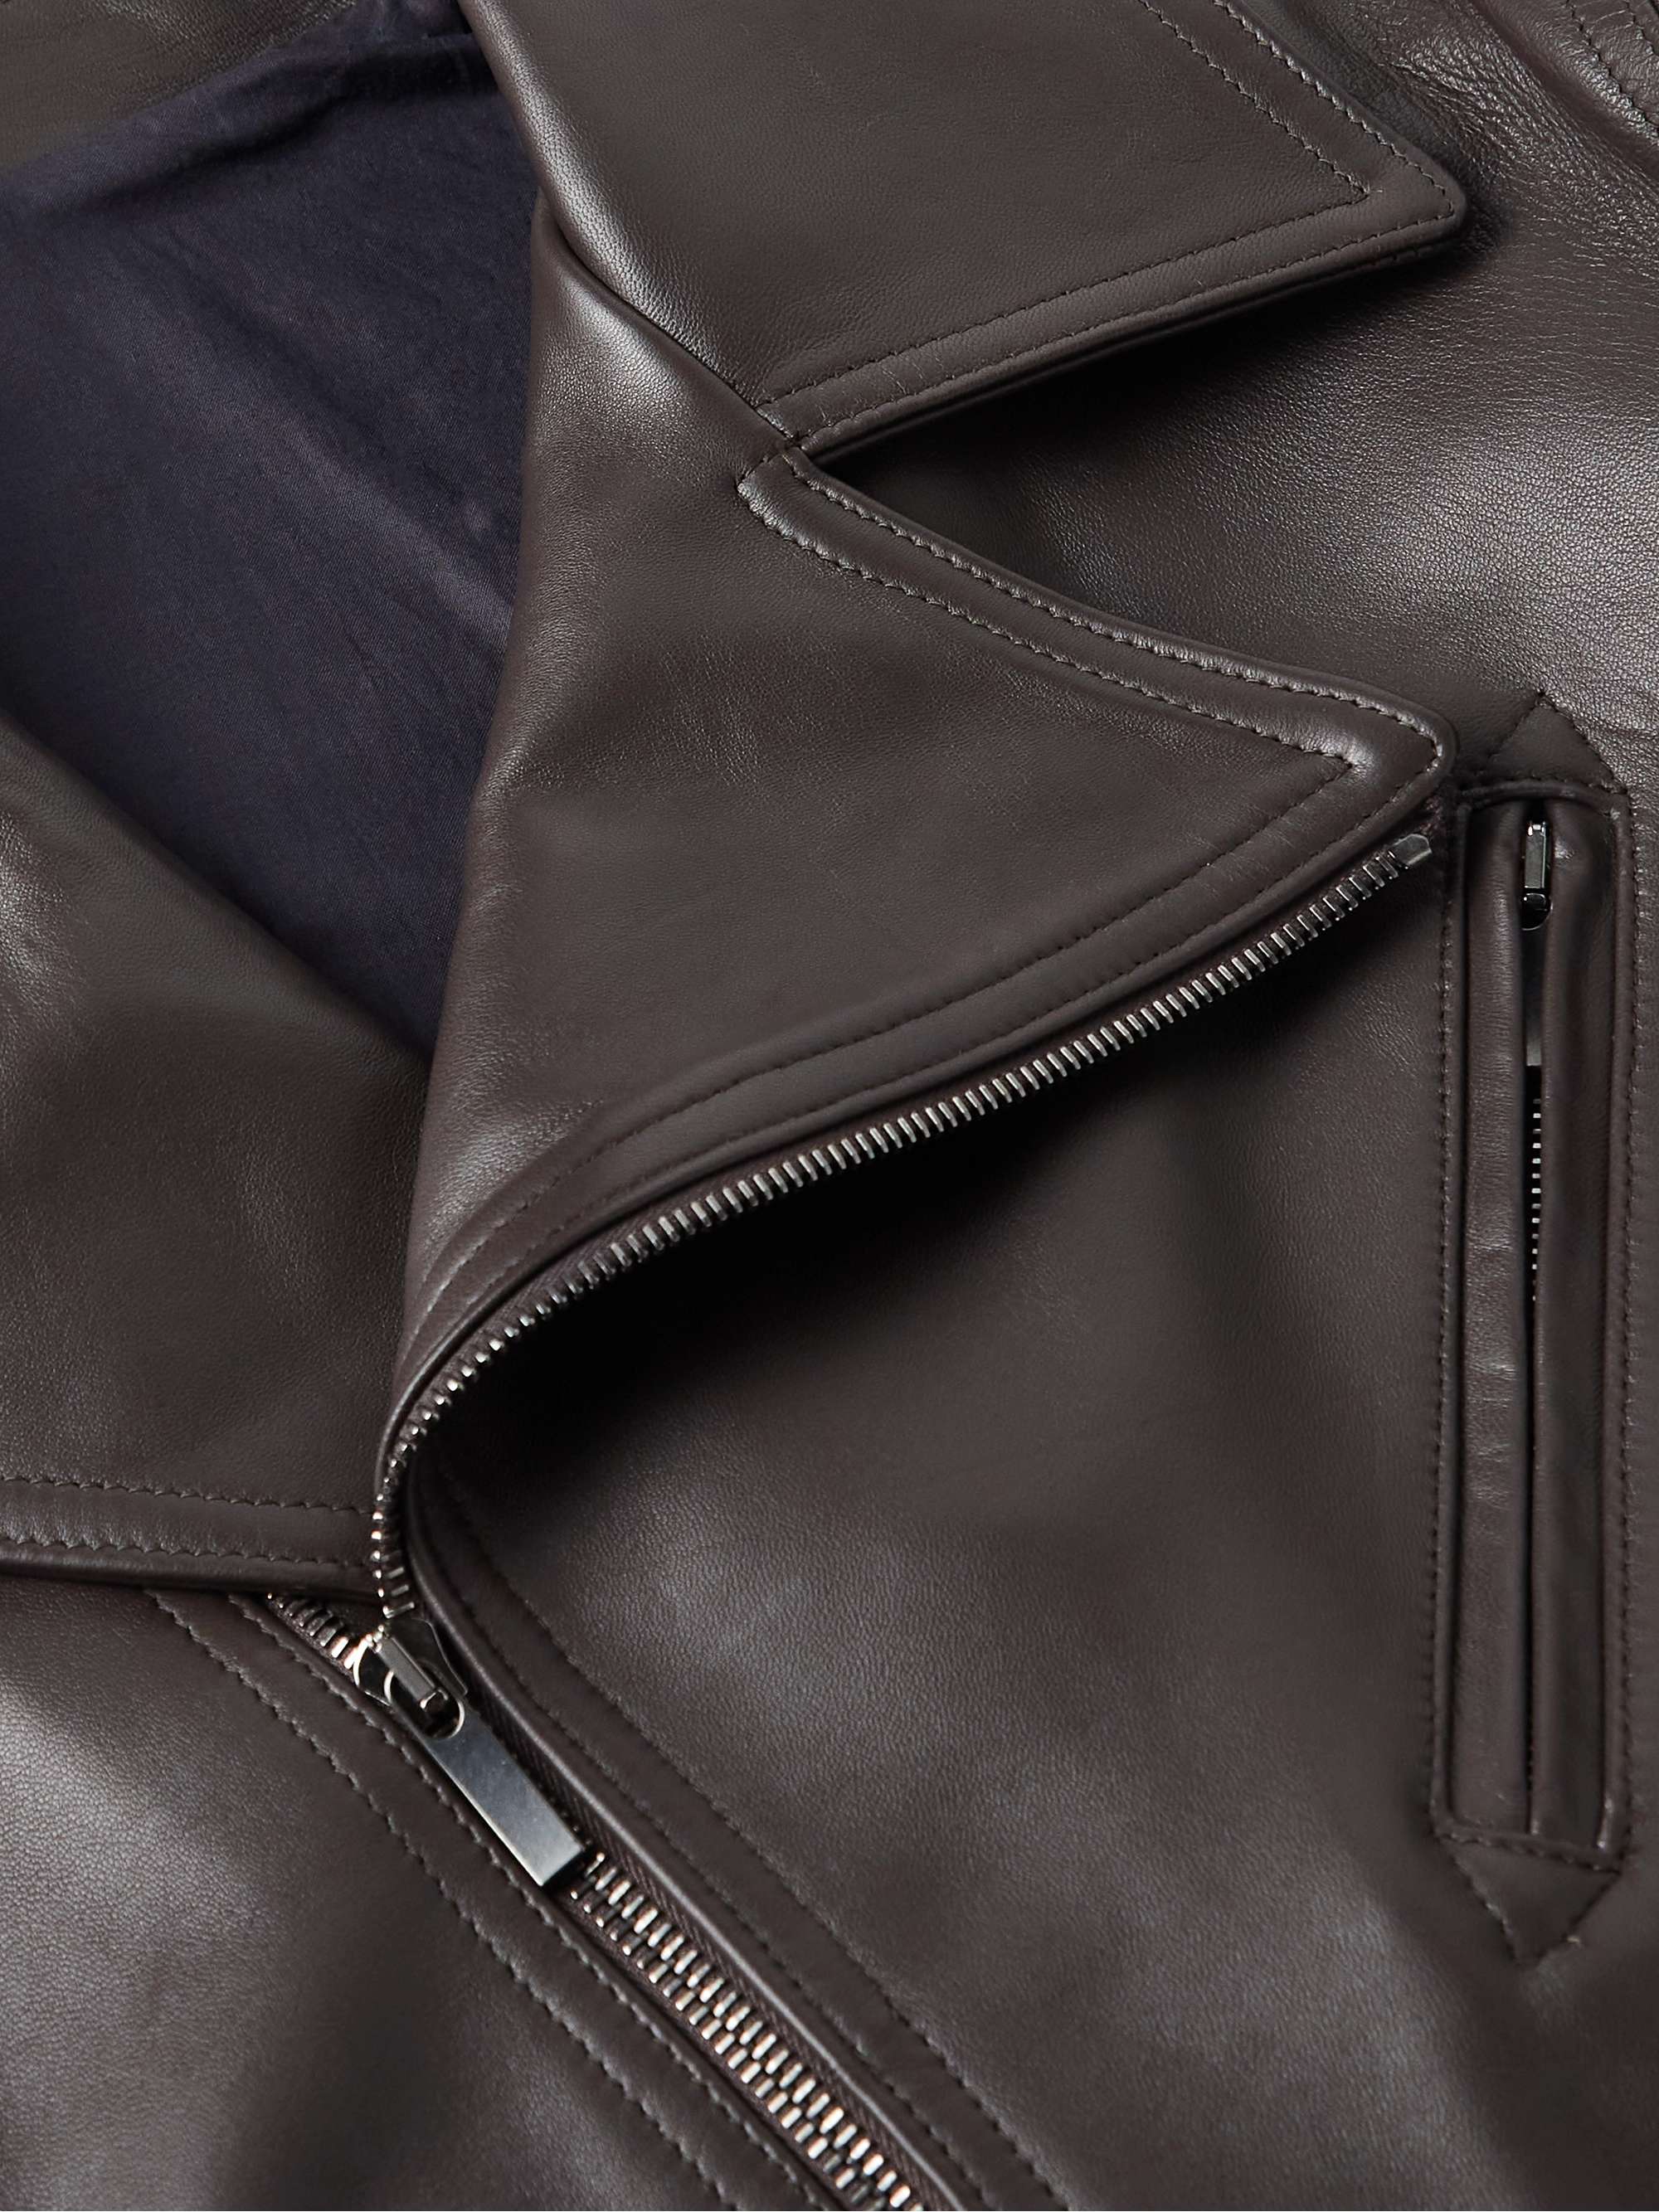 STÒFFA Leather Jacket